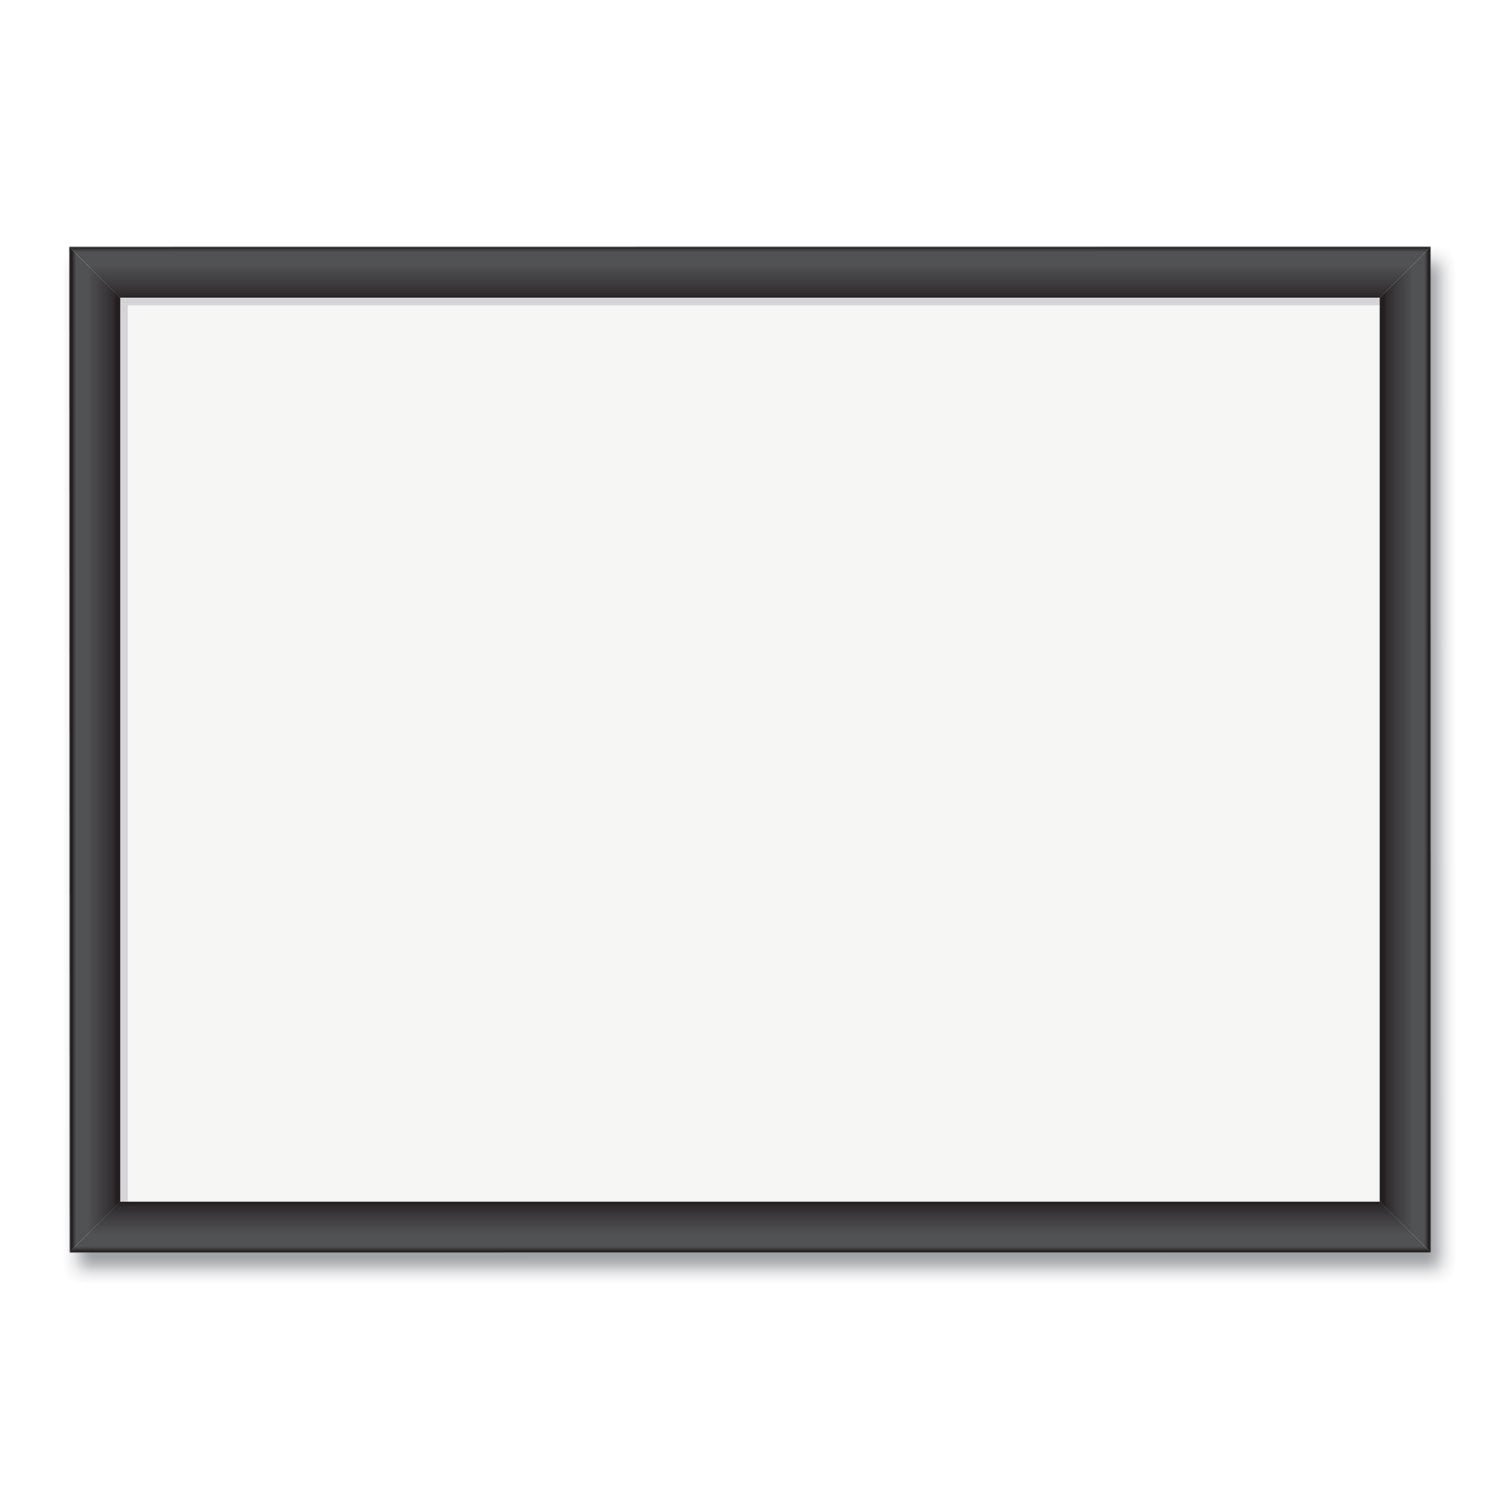 magnetic-dry-erase-board-with-wood-frame-23-x-17-white-surface-black-frame_ubr307u0001 - 1